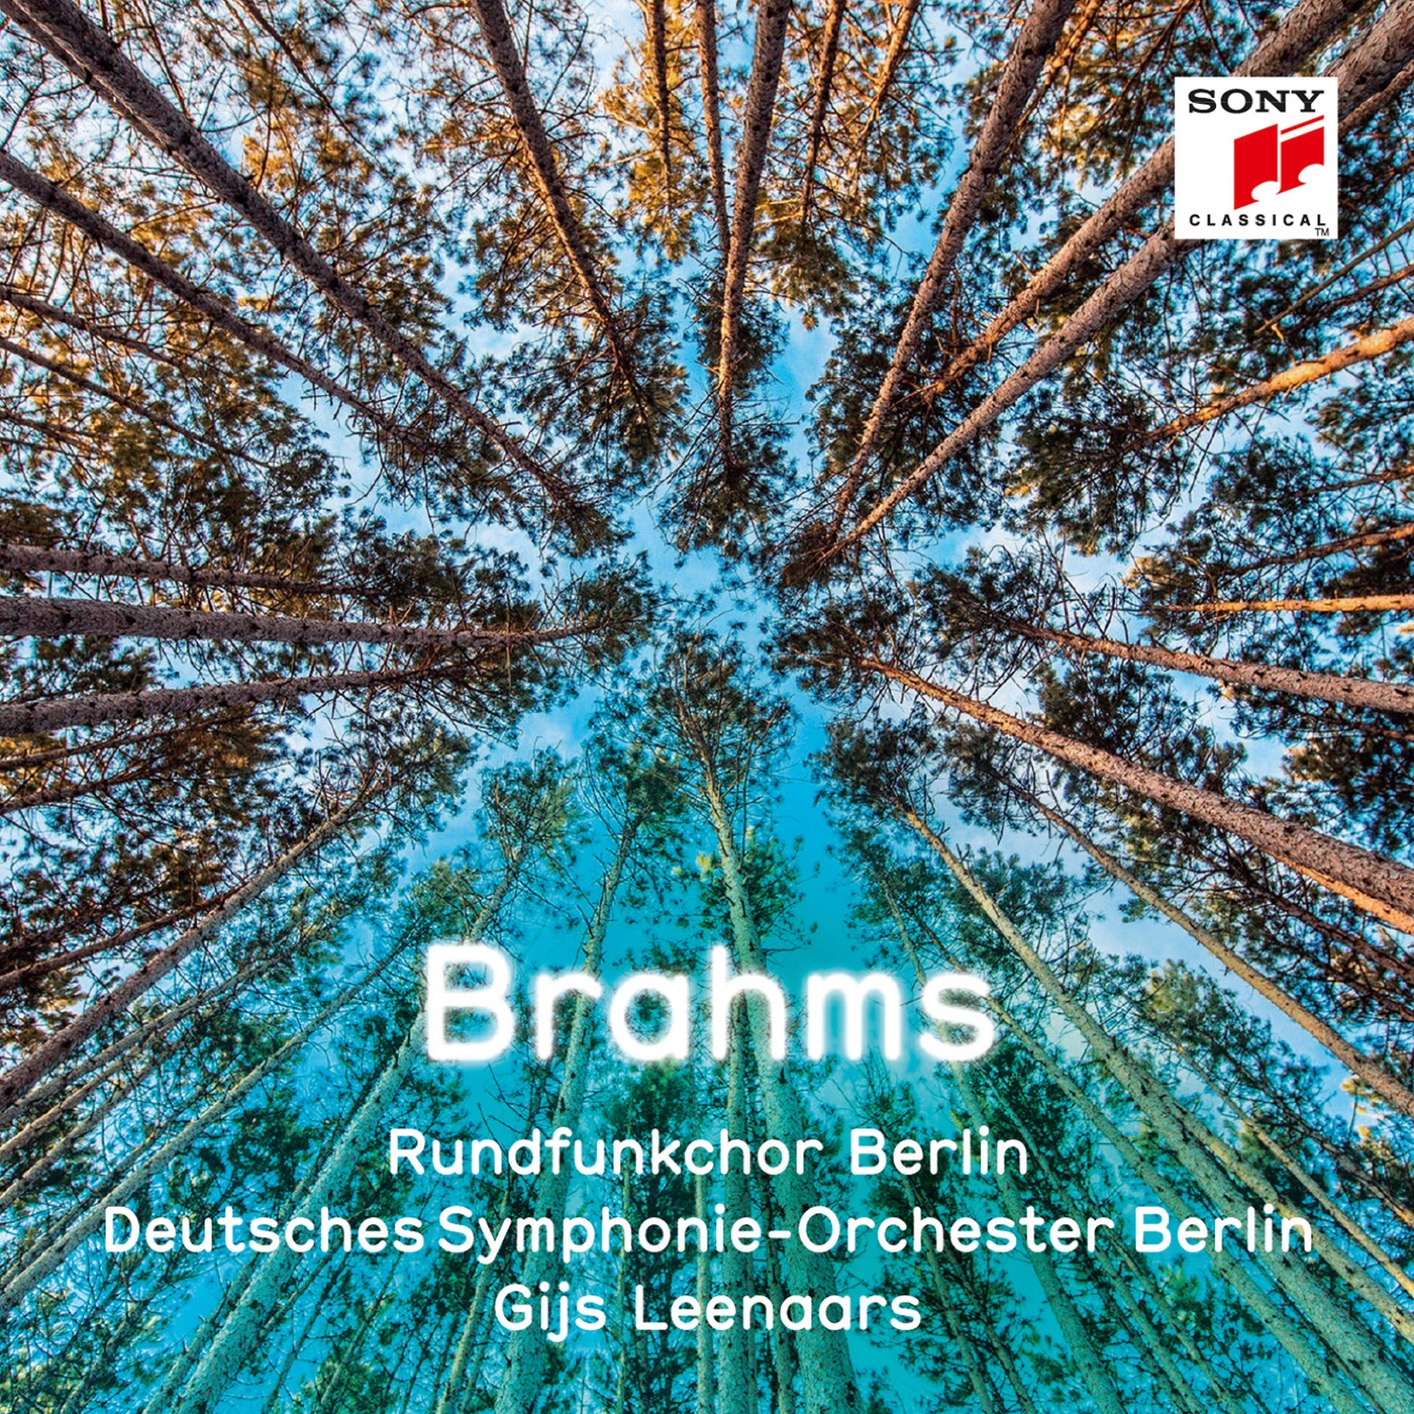 Rundfunkchor Berlin - Brahms (2019) [FLAC 24bit/48kHz]